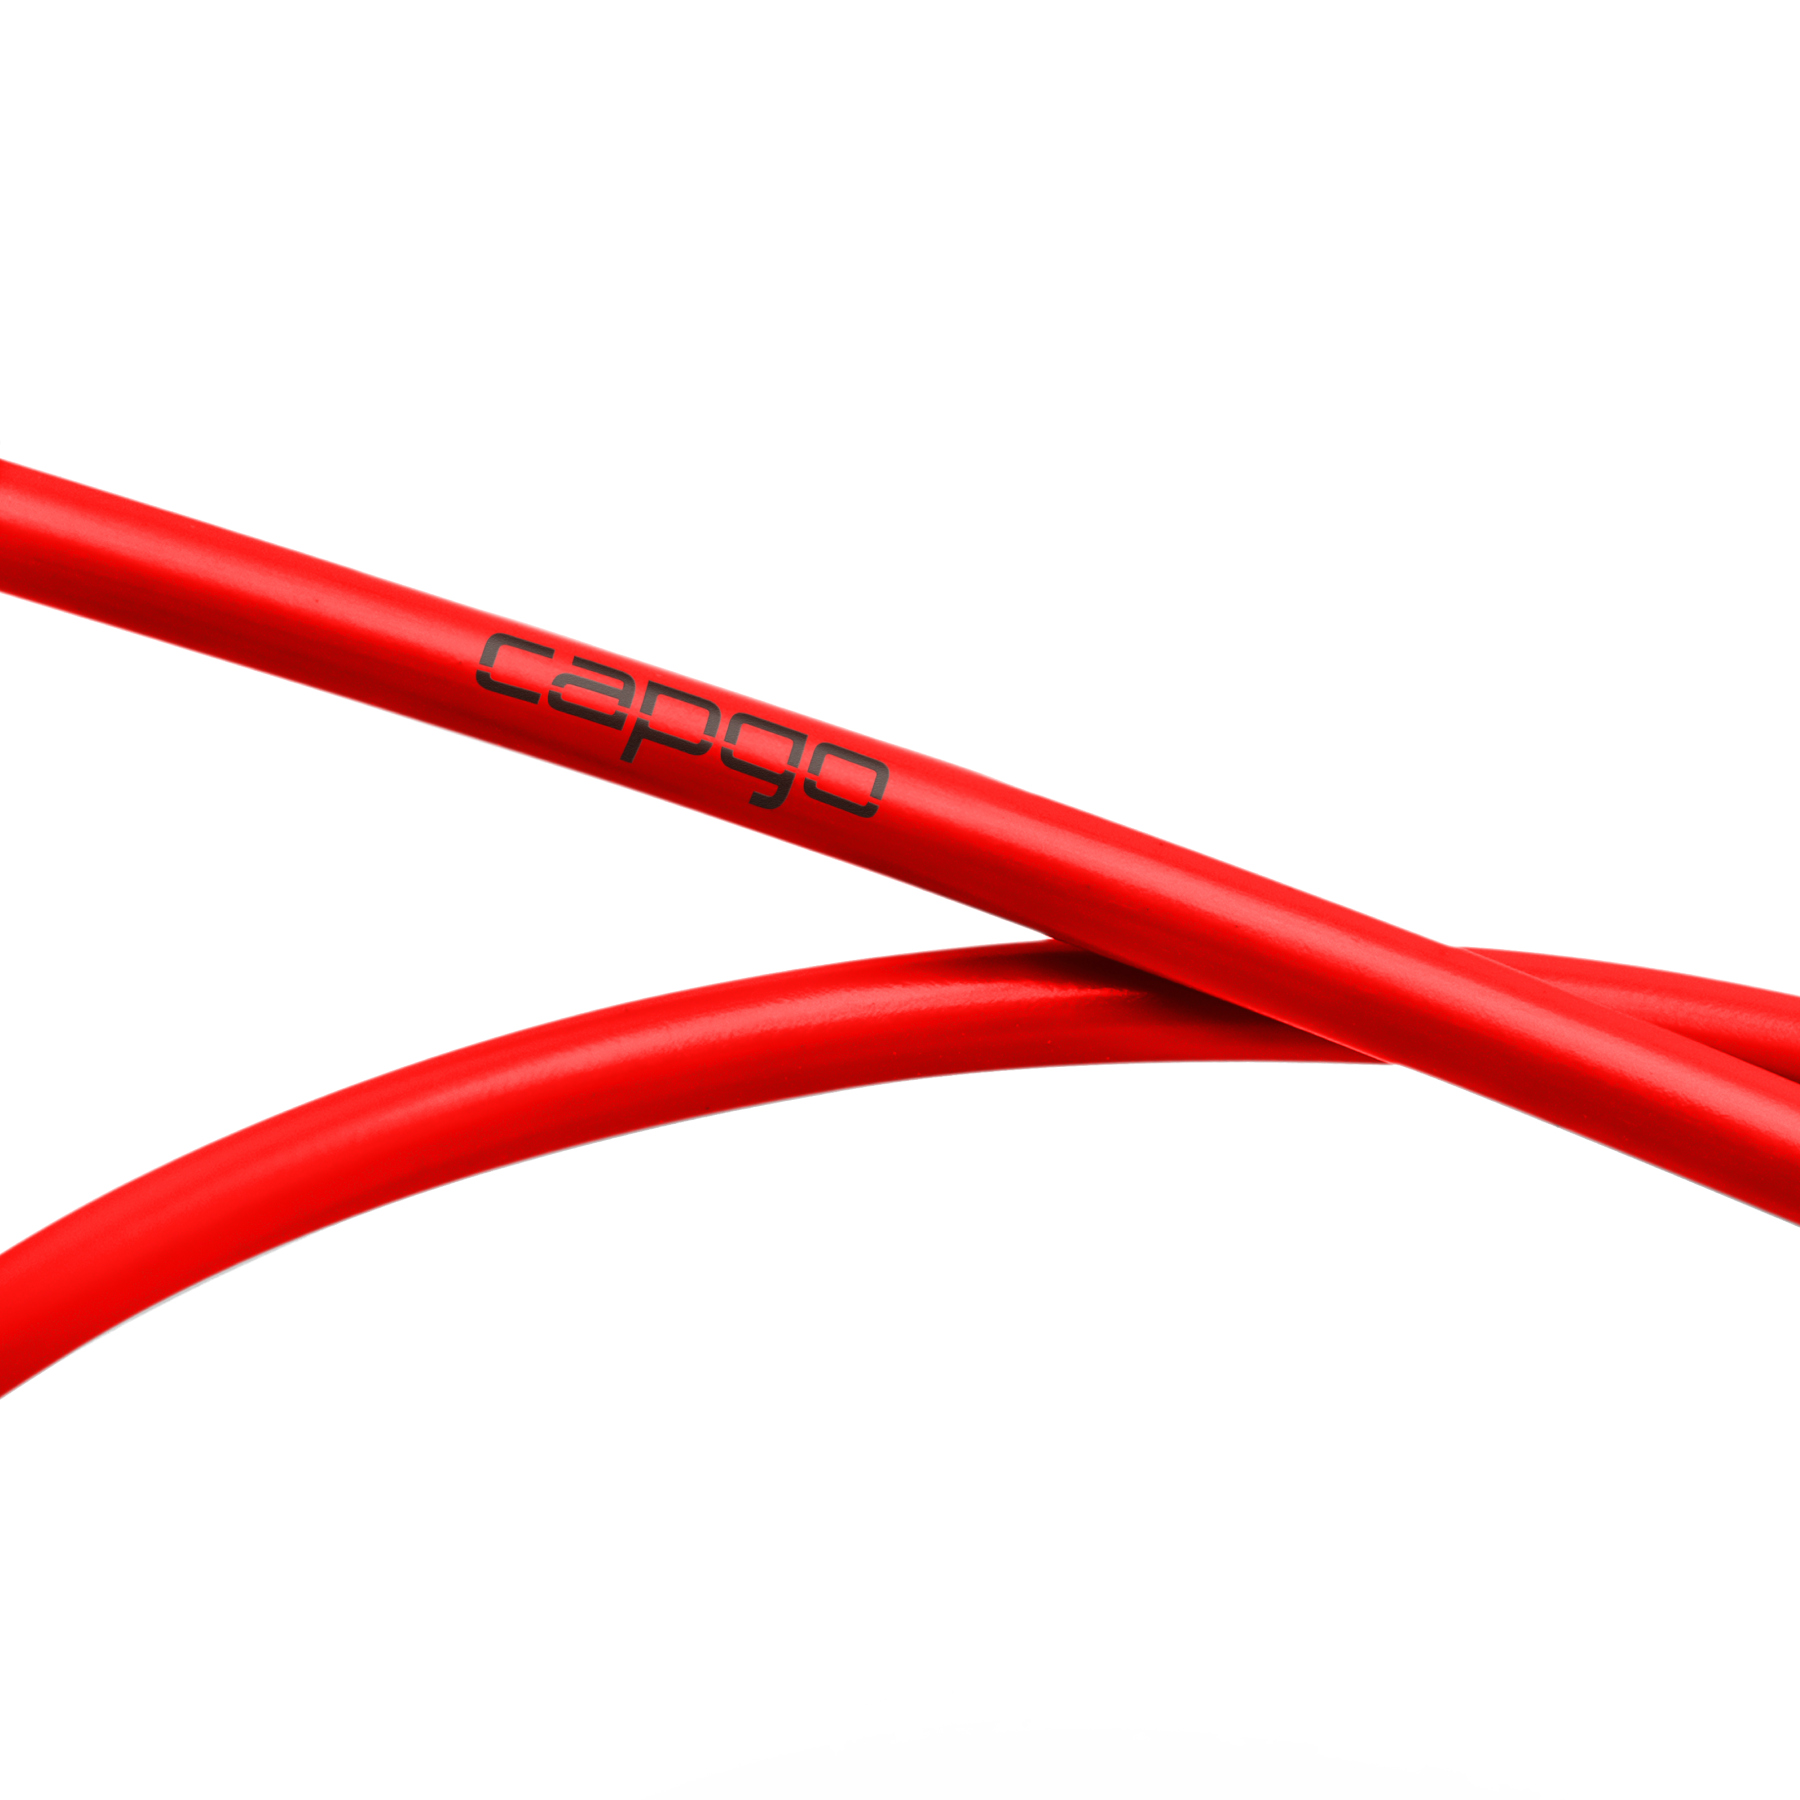 Productfoto van capgo Blue Line Shift Cable Housing - 4 mm - PTFE - 3000 mm - red